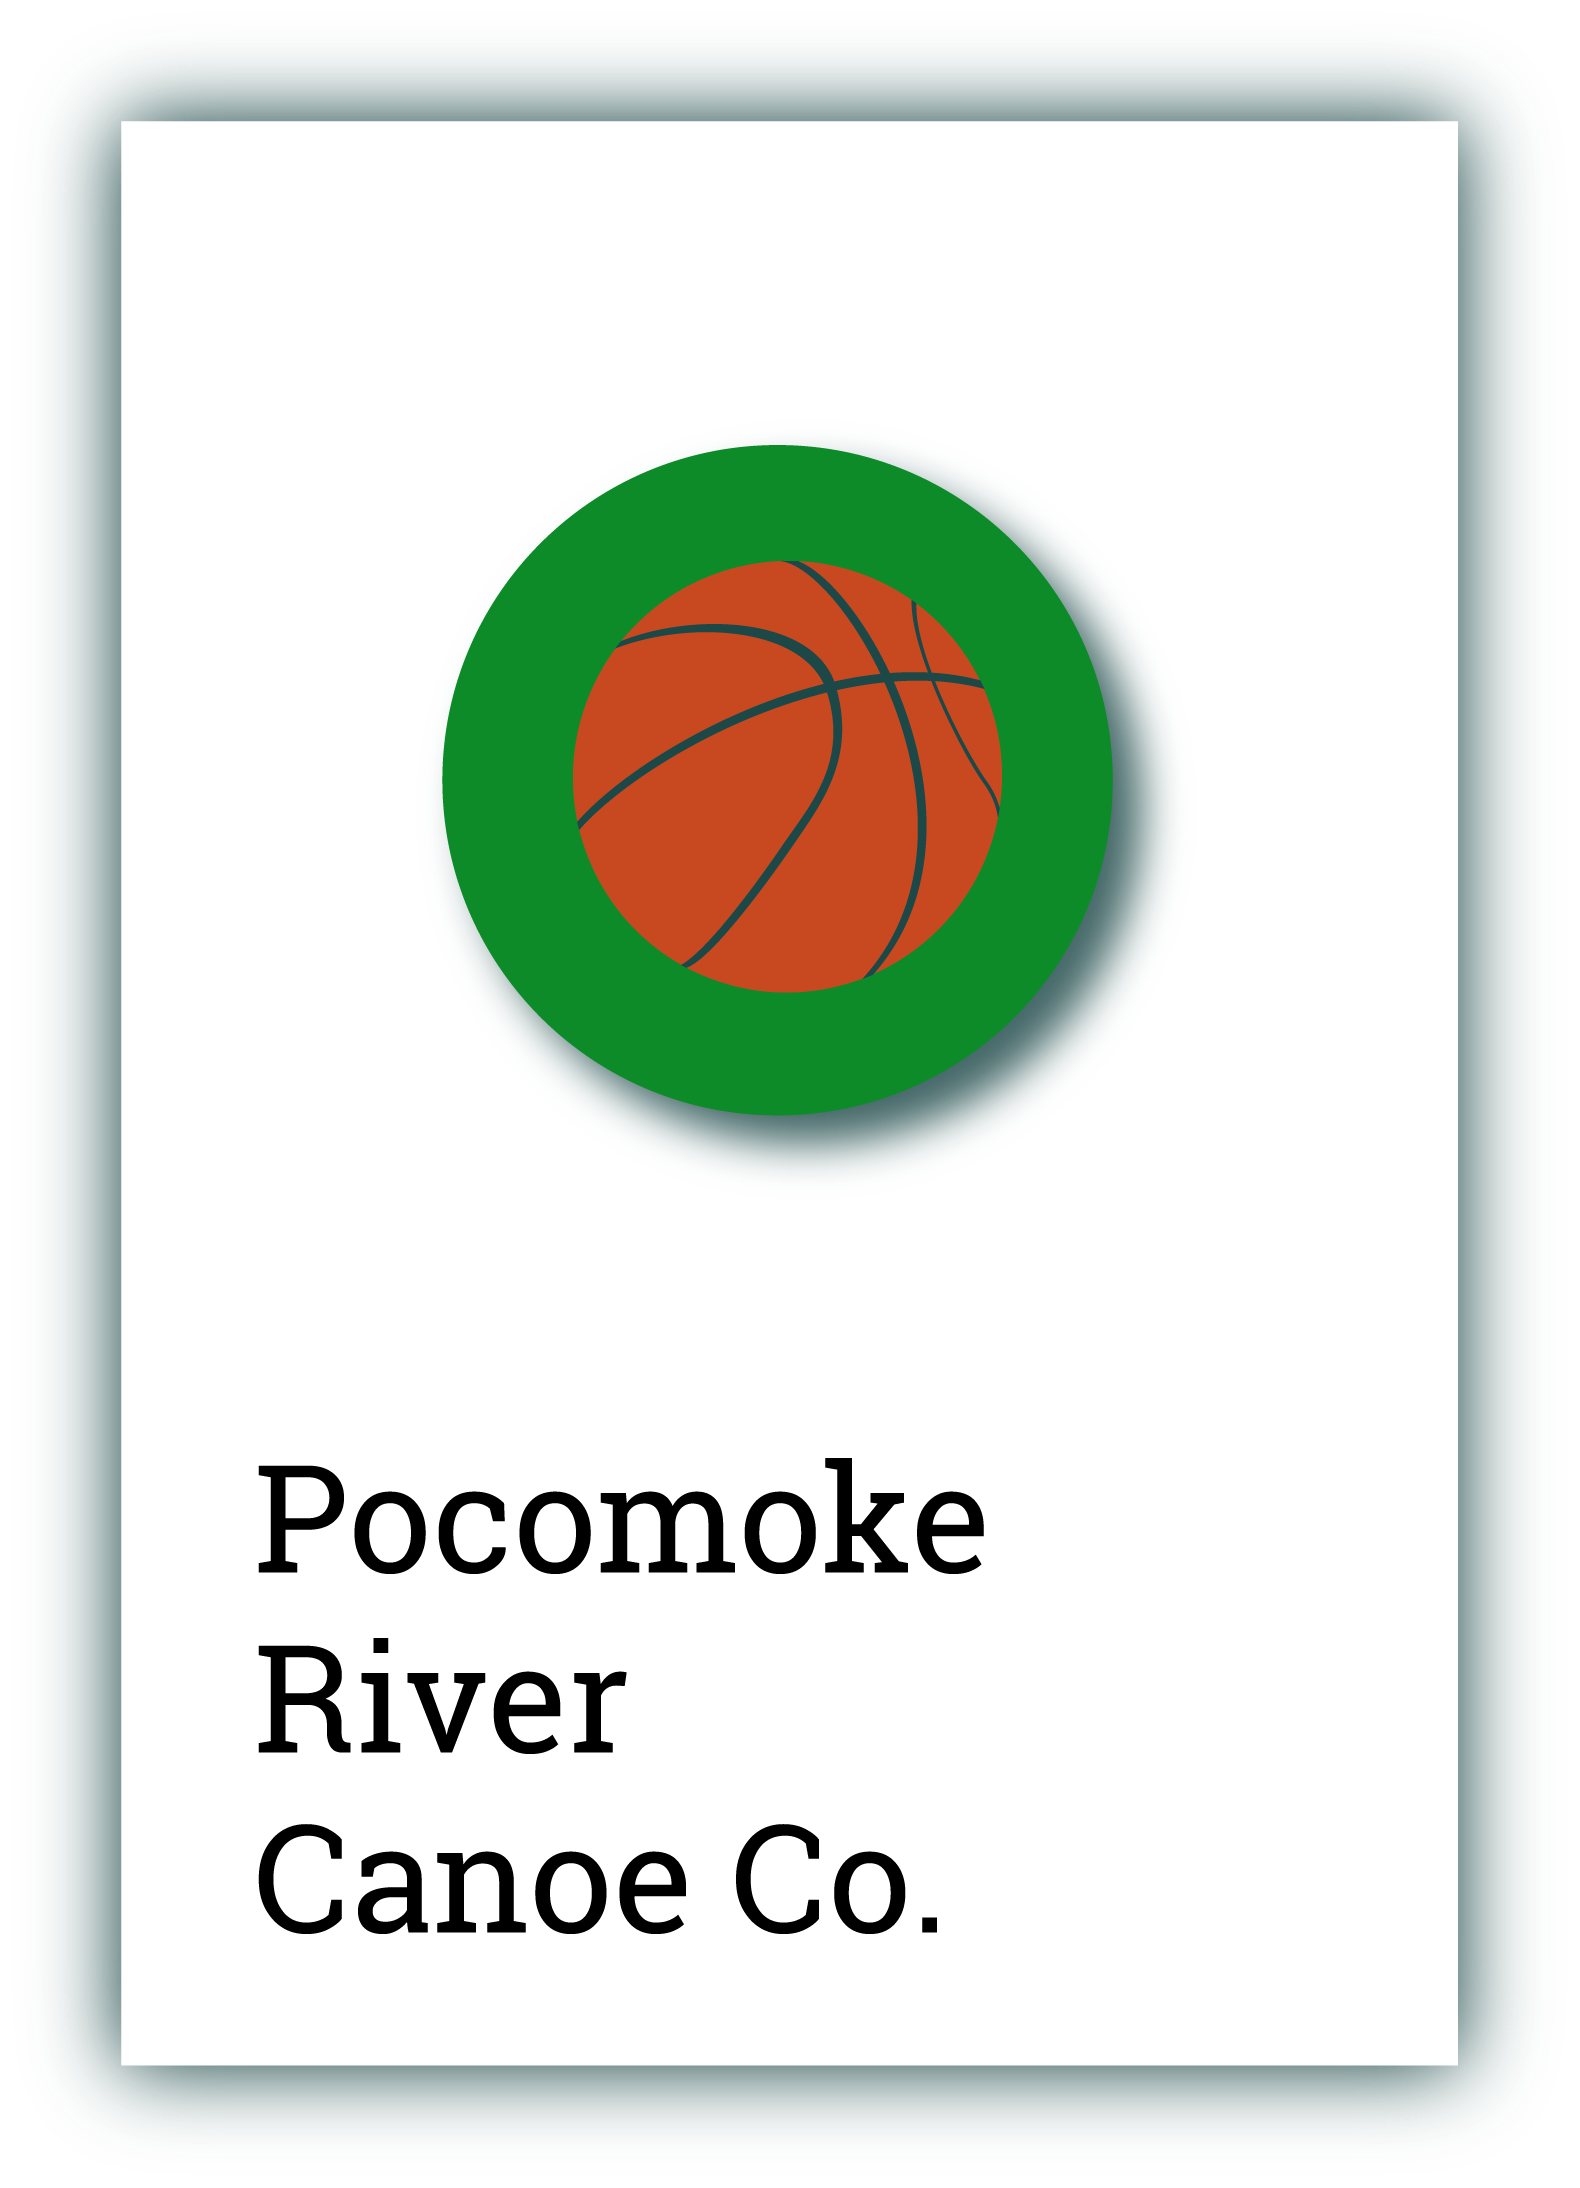 Pocomoke River Canoe Co